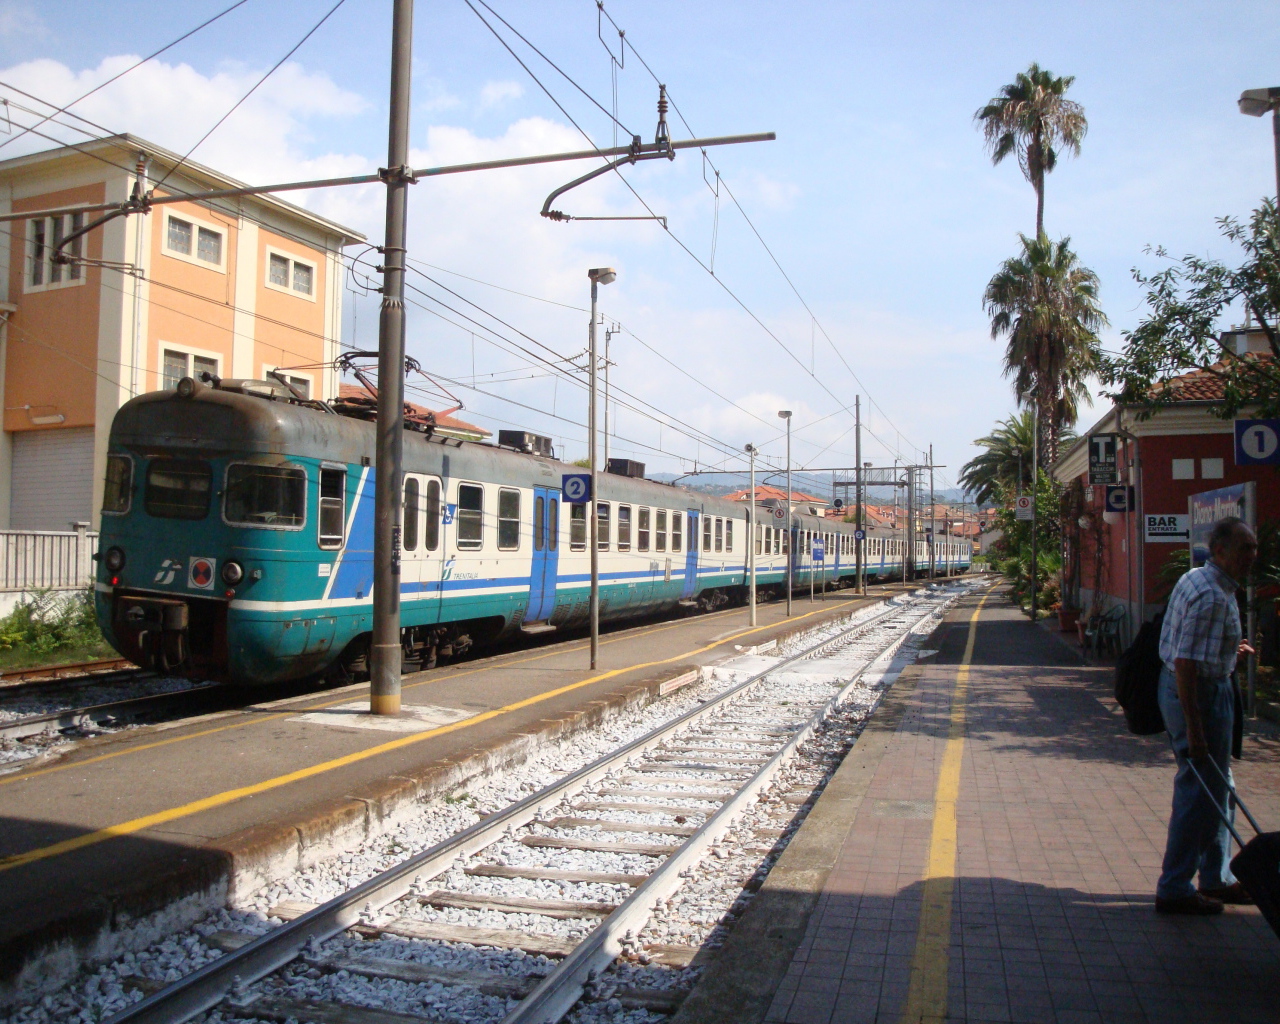 Railway station in the resort of Diano Marina, Italy